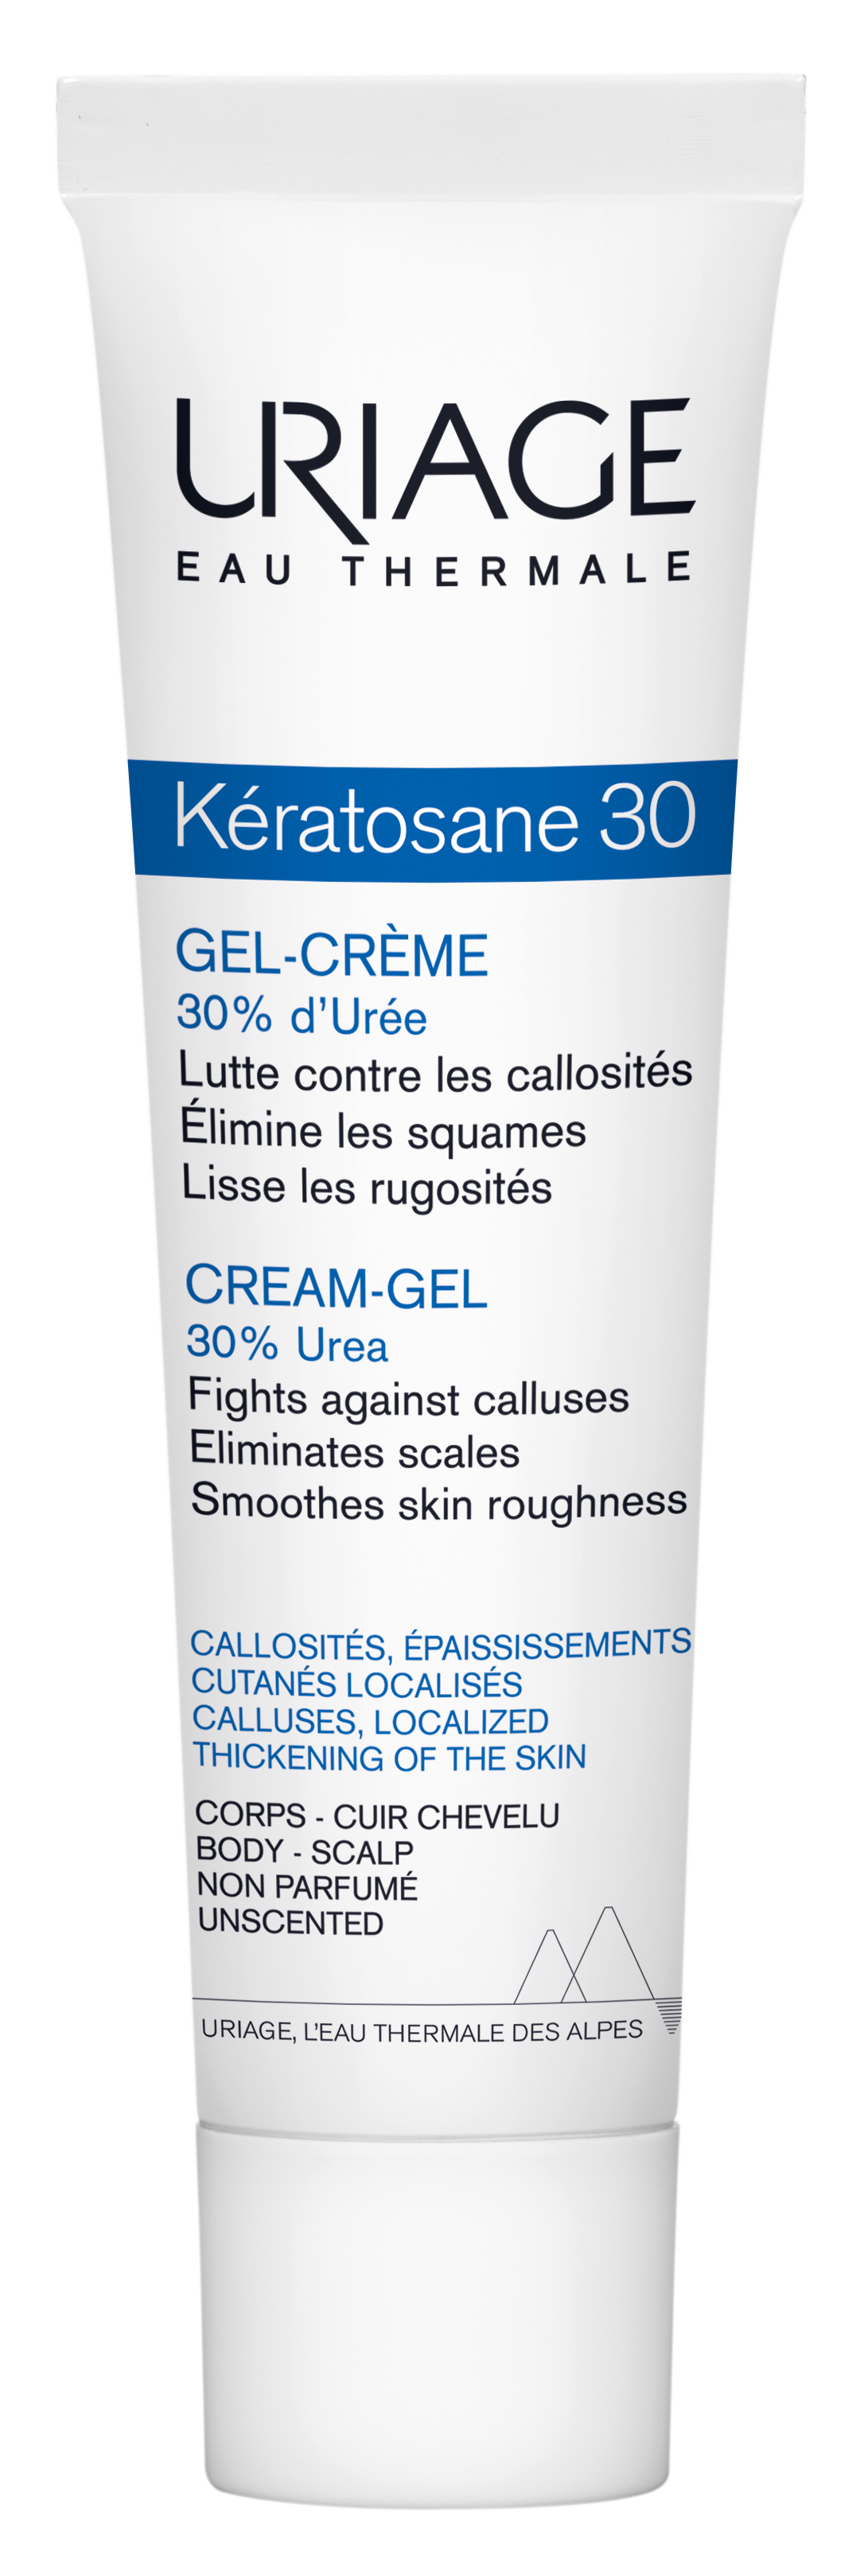 Kératosane 30 gel crème Uriage - tube de 40 ml